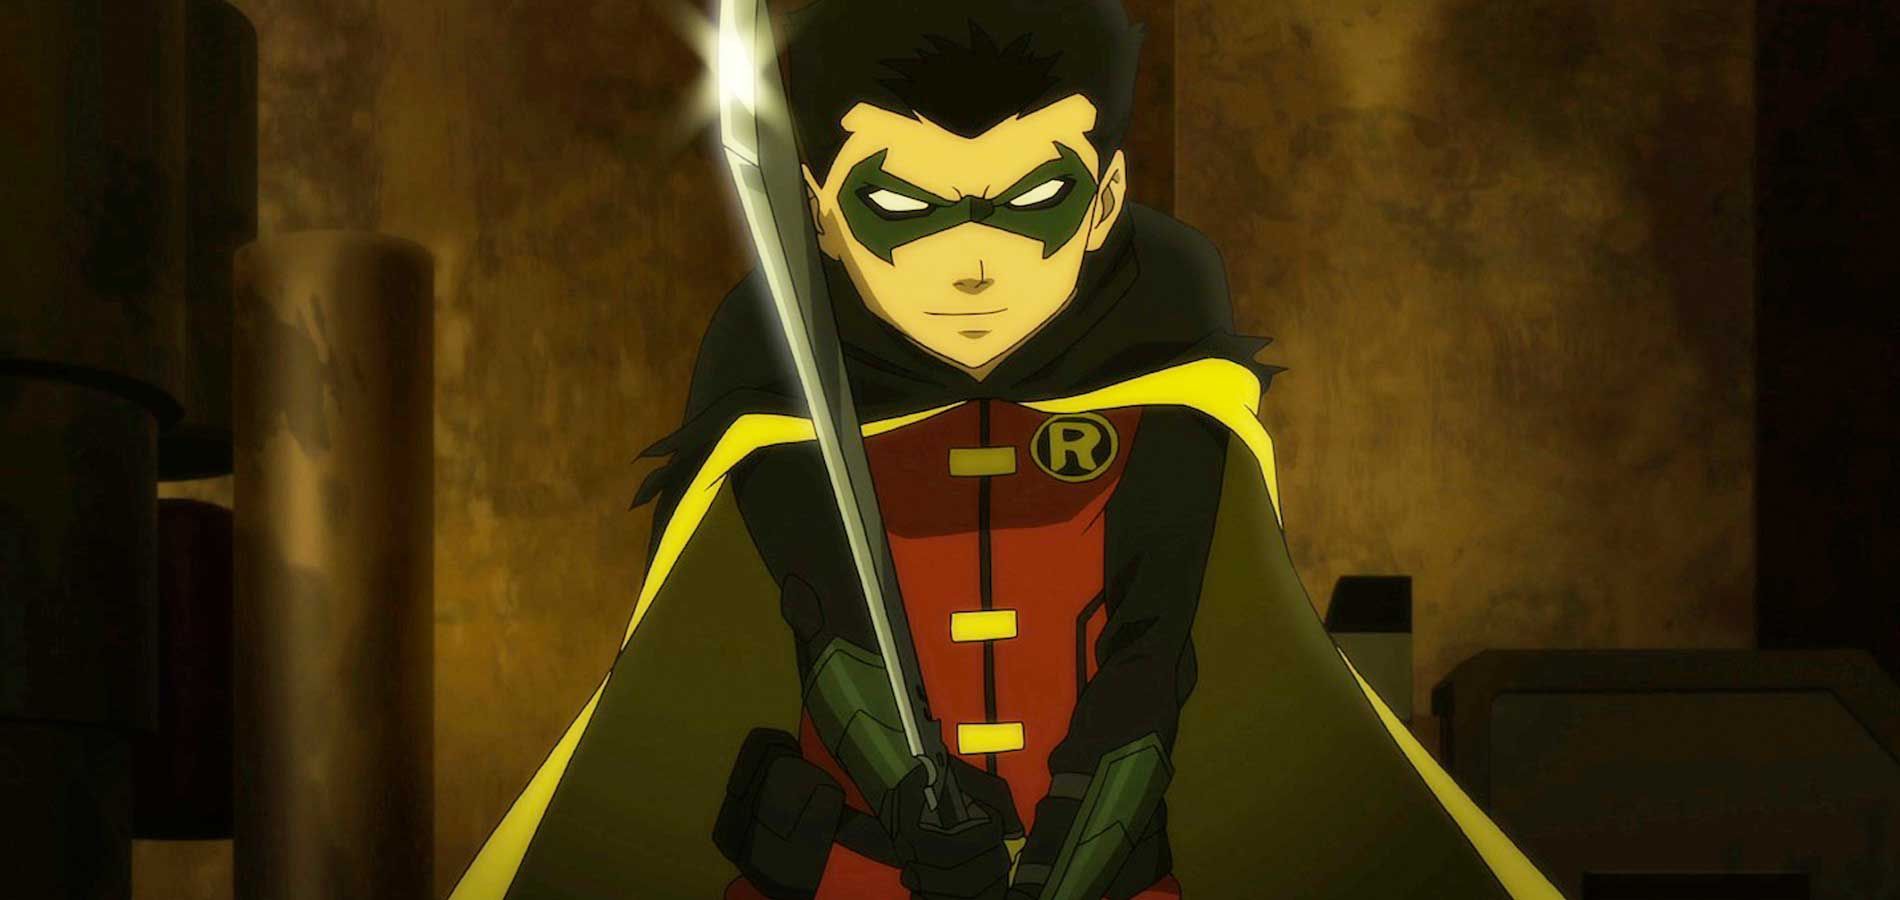 Damian Wayne, le 5e Robin. Source: DC Comics